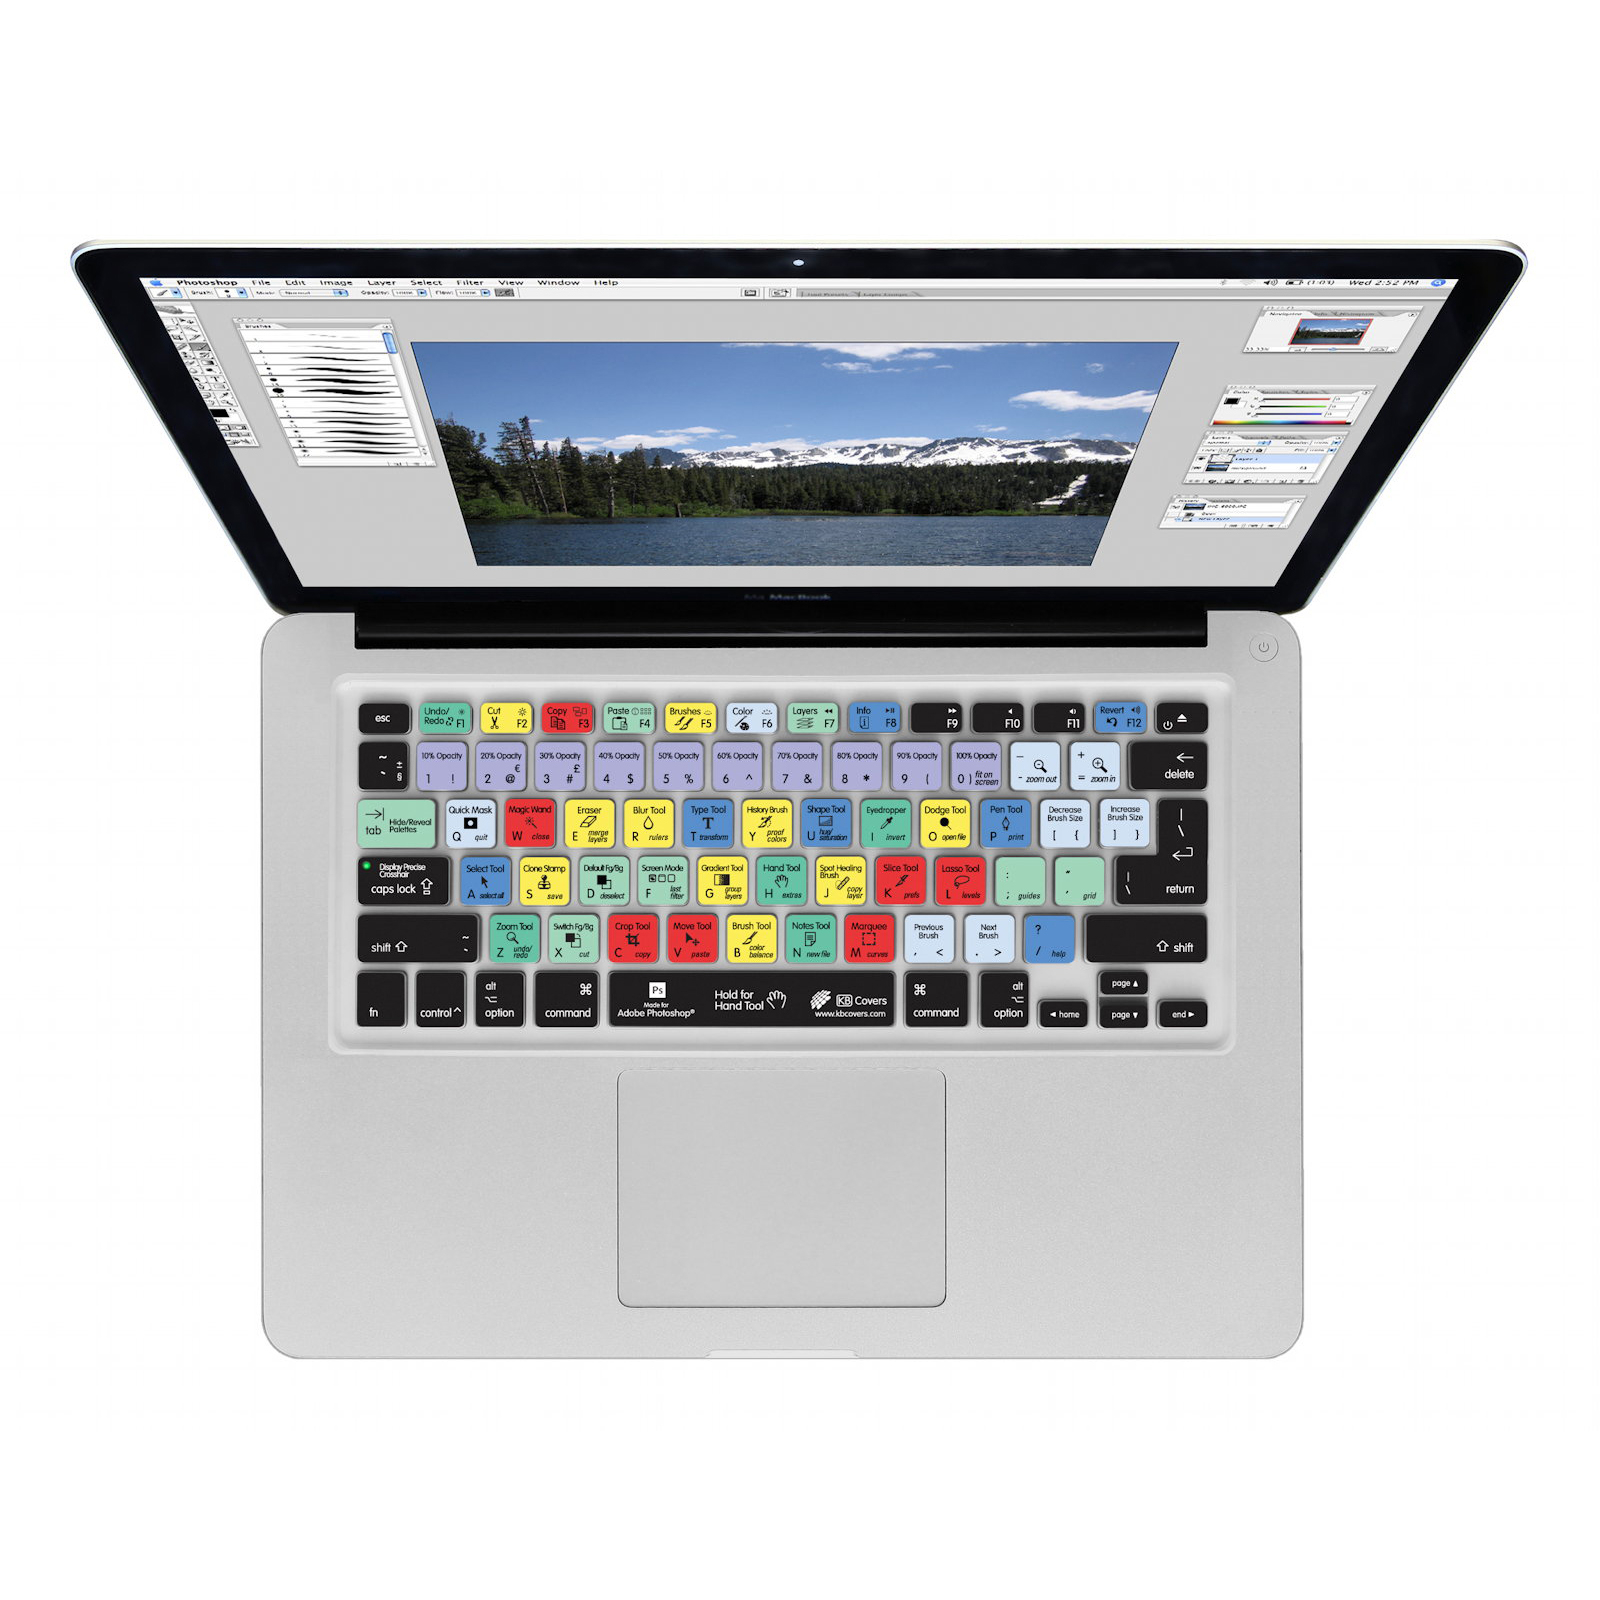 Photoshop CS6 QWERTY Keyboard Cover - силиконова обвивка за Adobe Photoshop CS6 за MacBook, MacBook Air и MacBook Pro